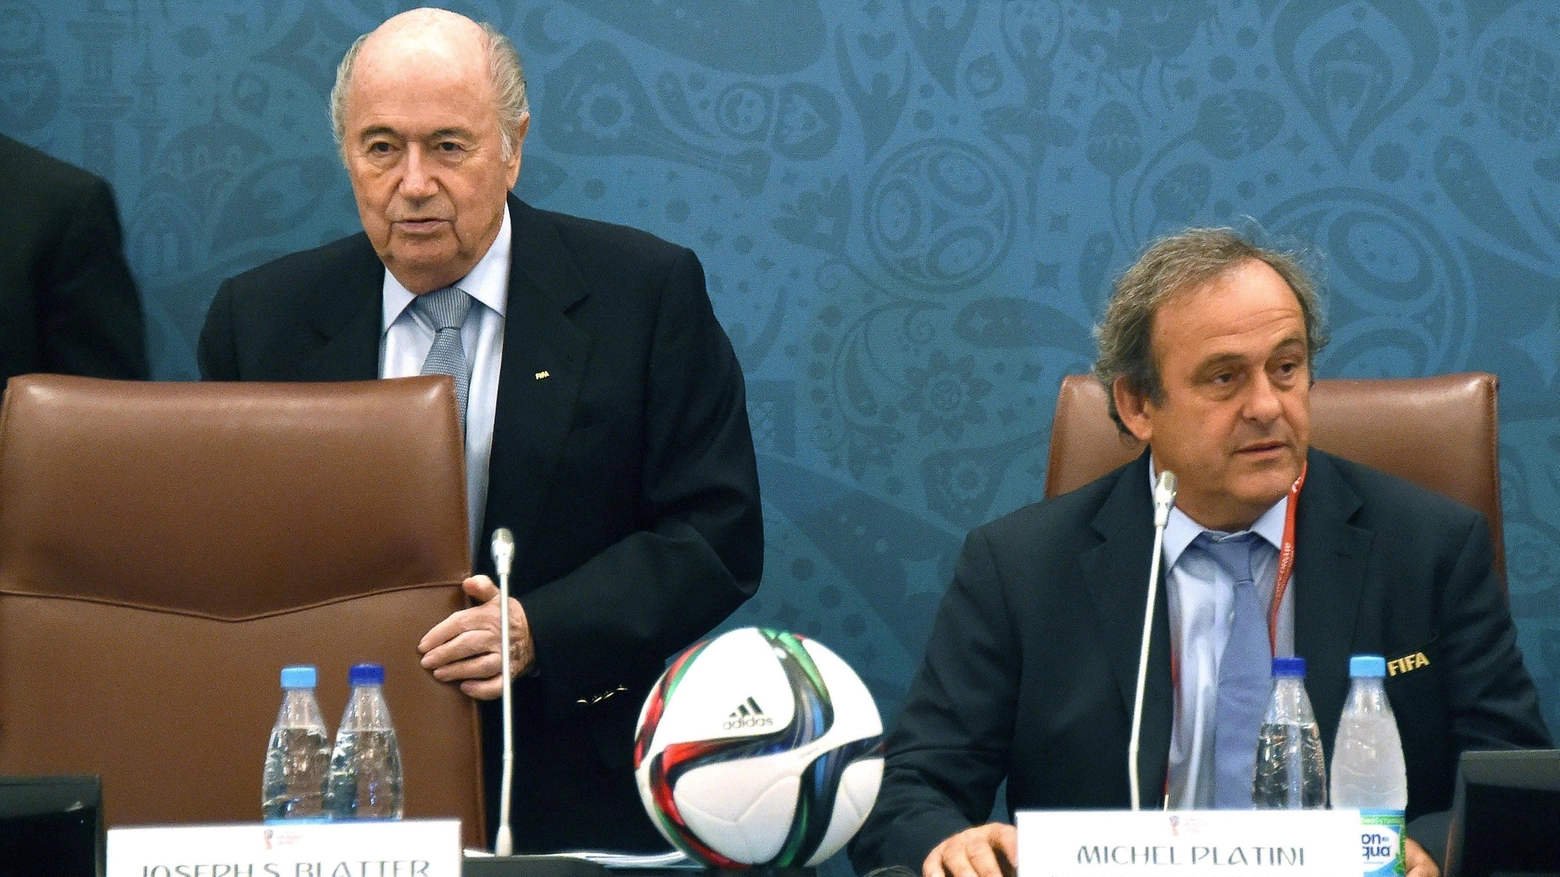 Blatter e Platini